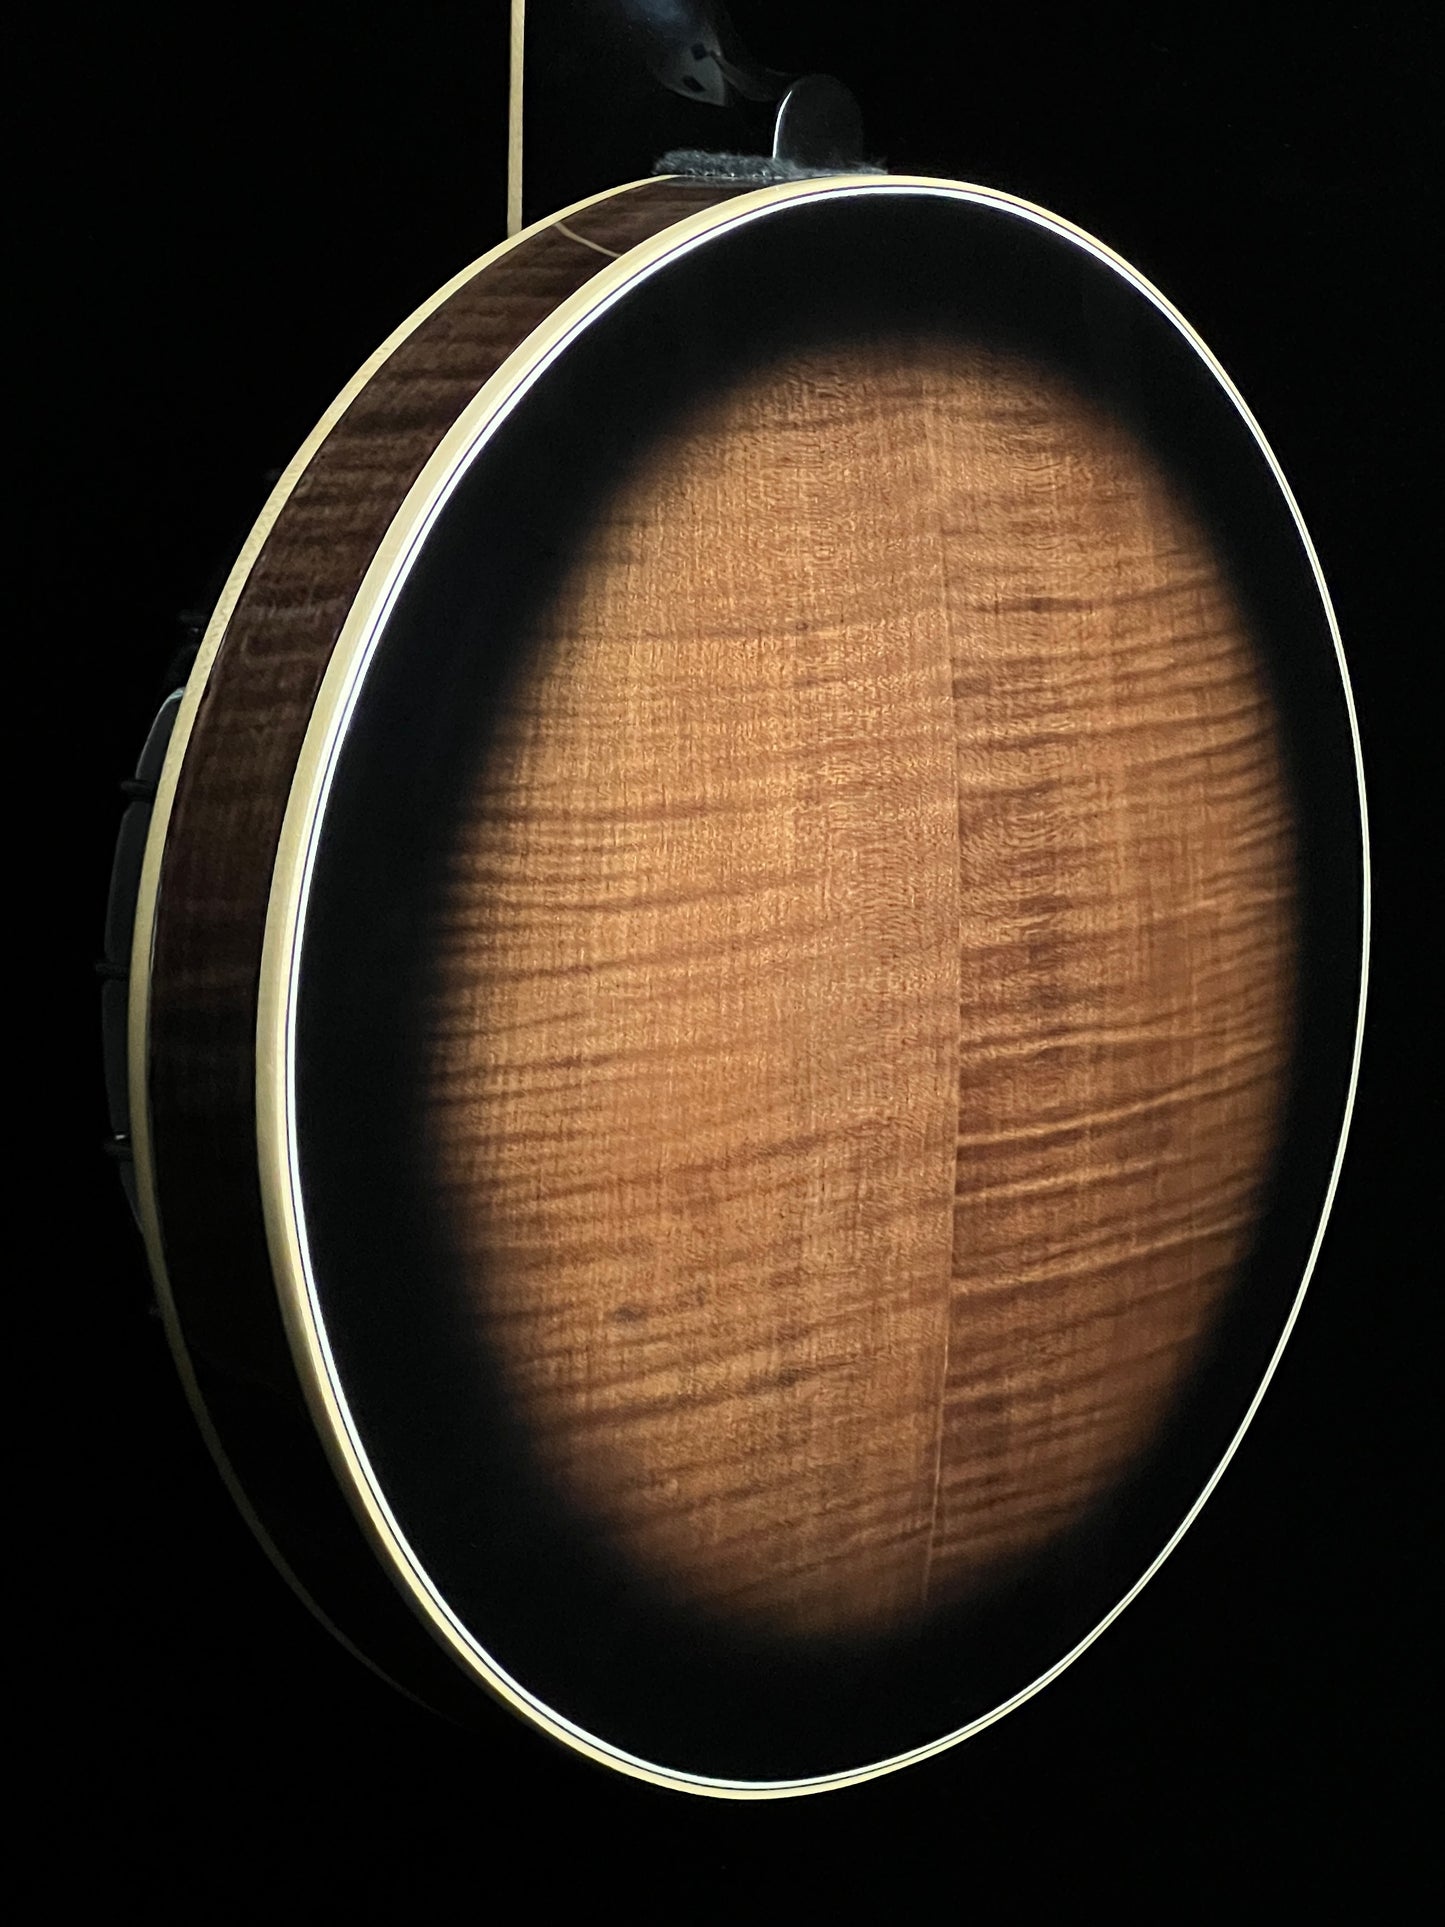 Mastertone Gold Tone Orange Blossom Arch Top Banjo with Resonator OB-250AT - New